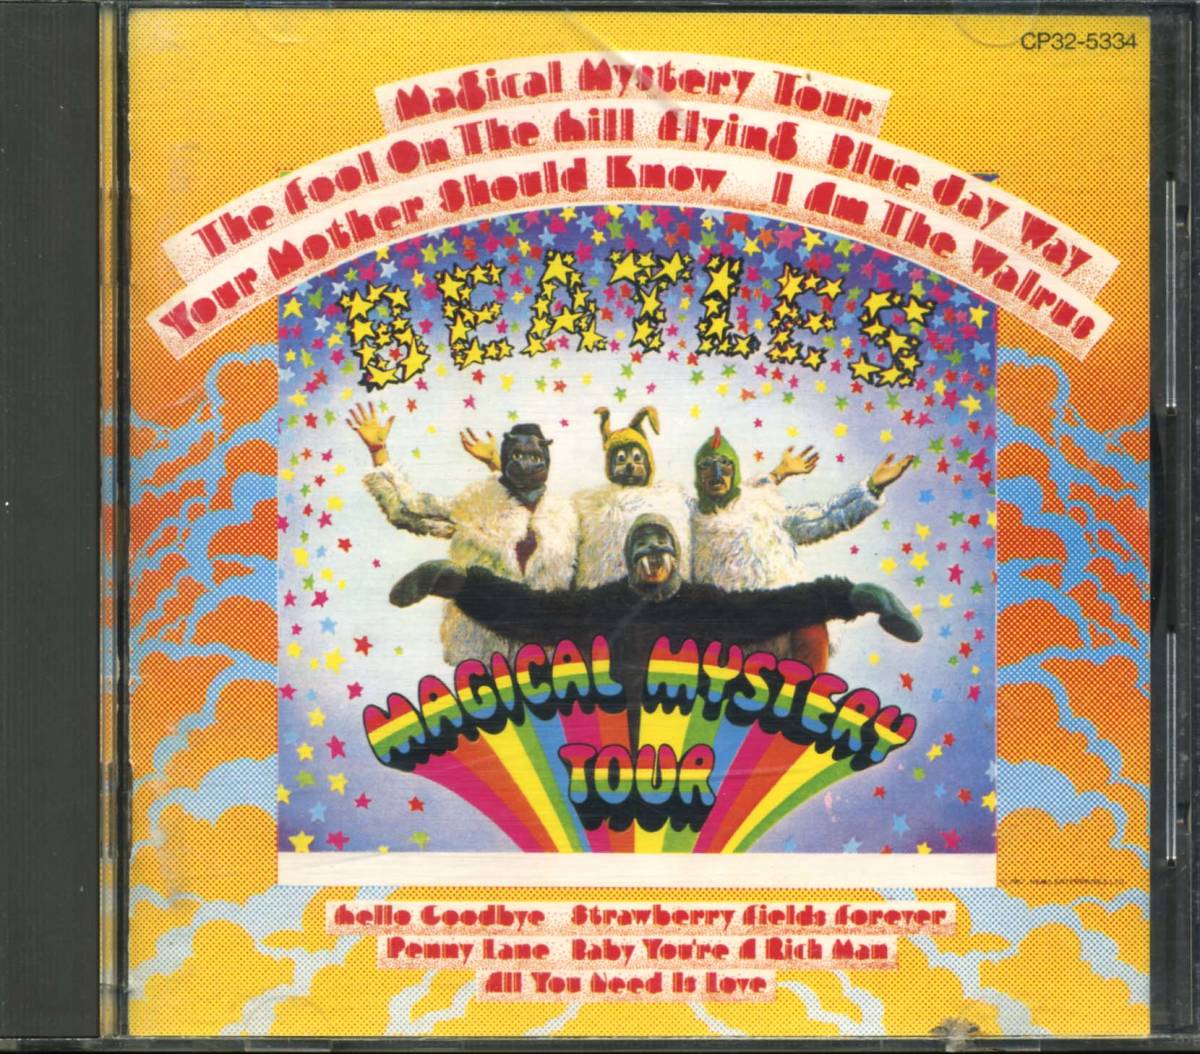 The BEATLES*Magical Mystery Tour [ The Beatles,John Lennon,Paul McCartney,George Harrison,Ringo Starr]